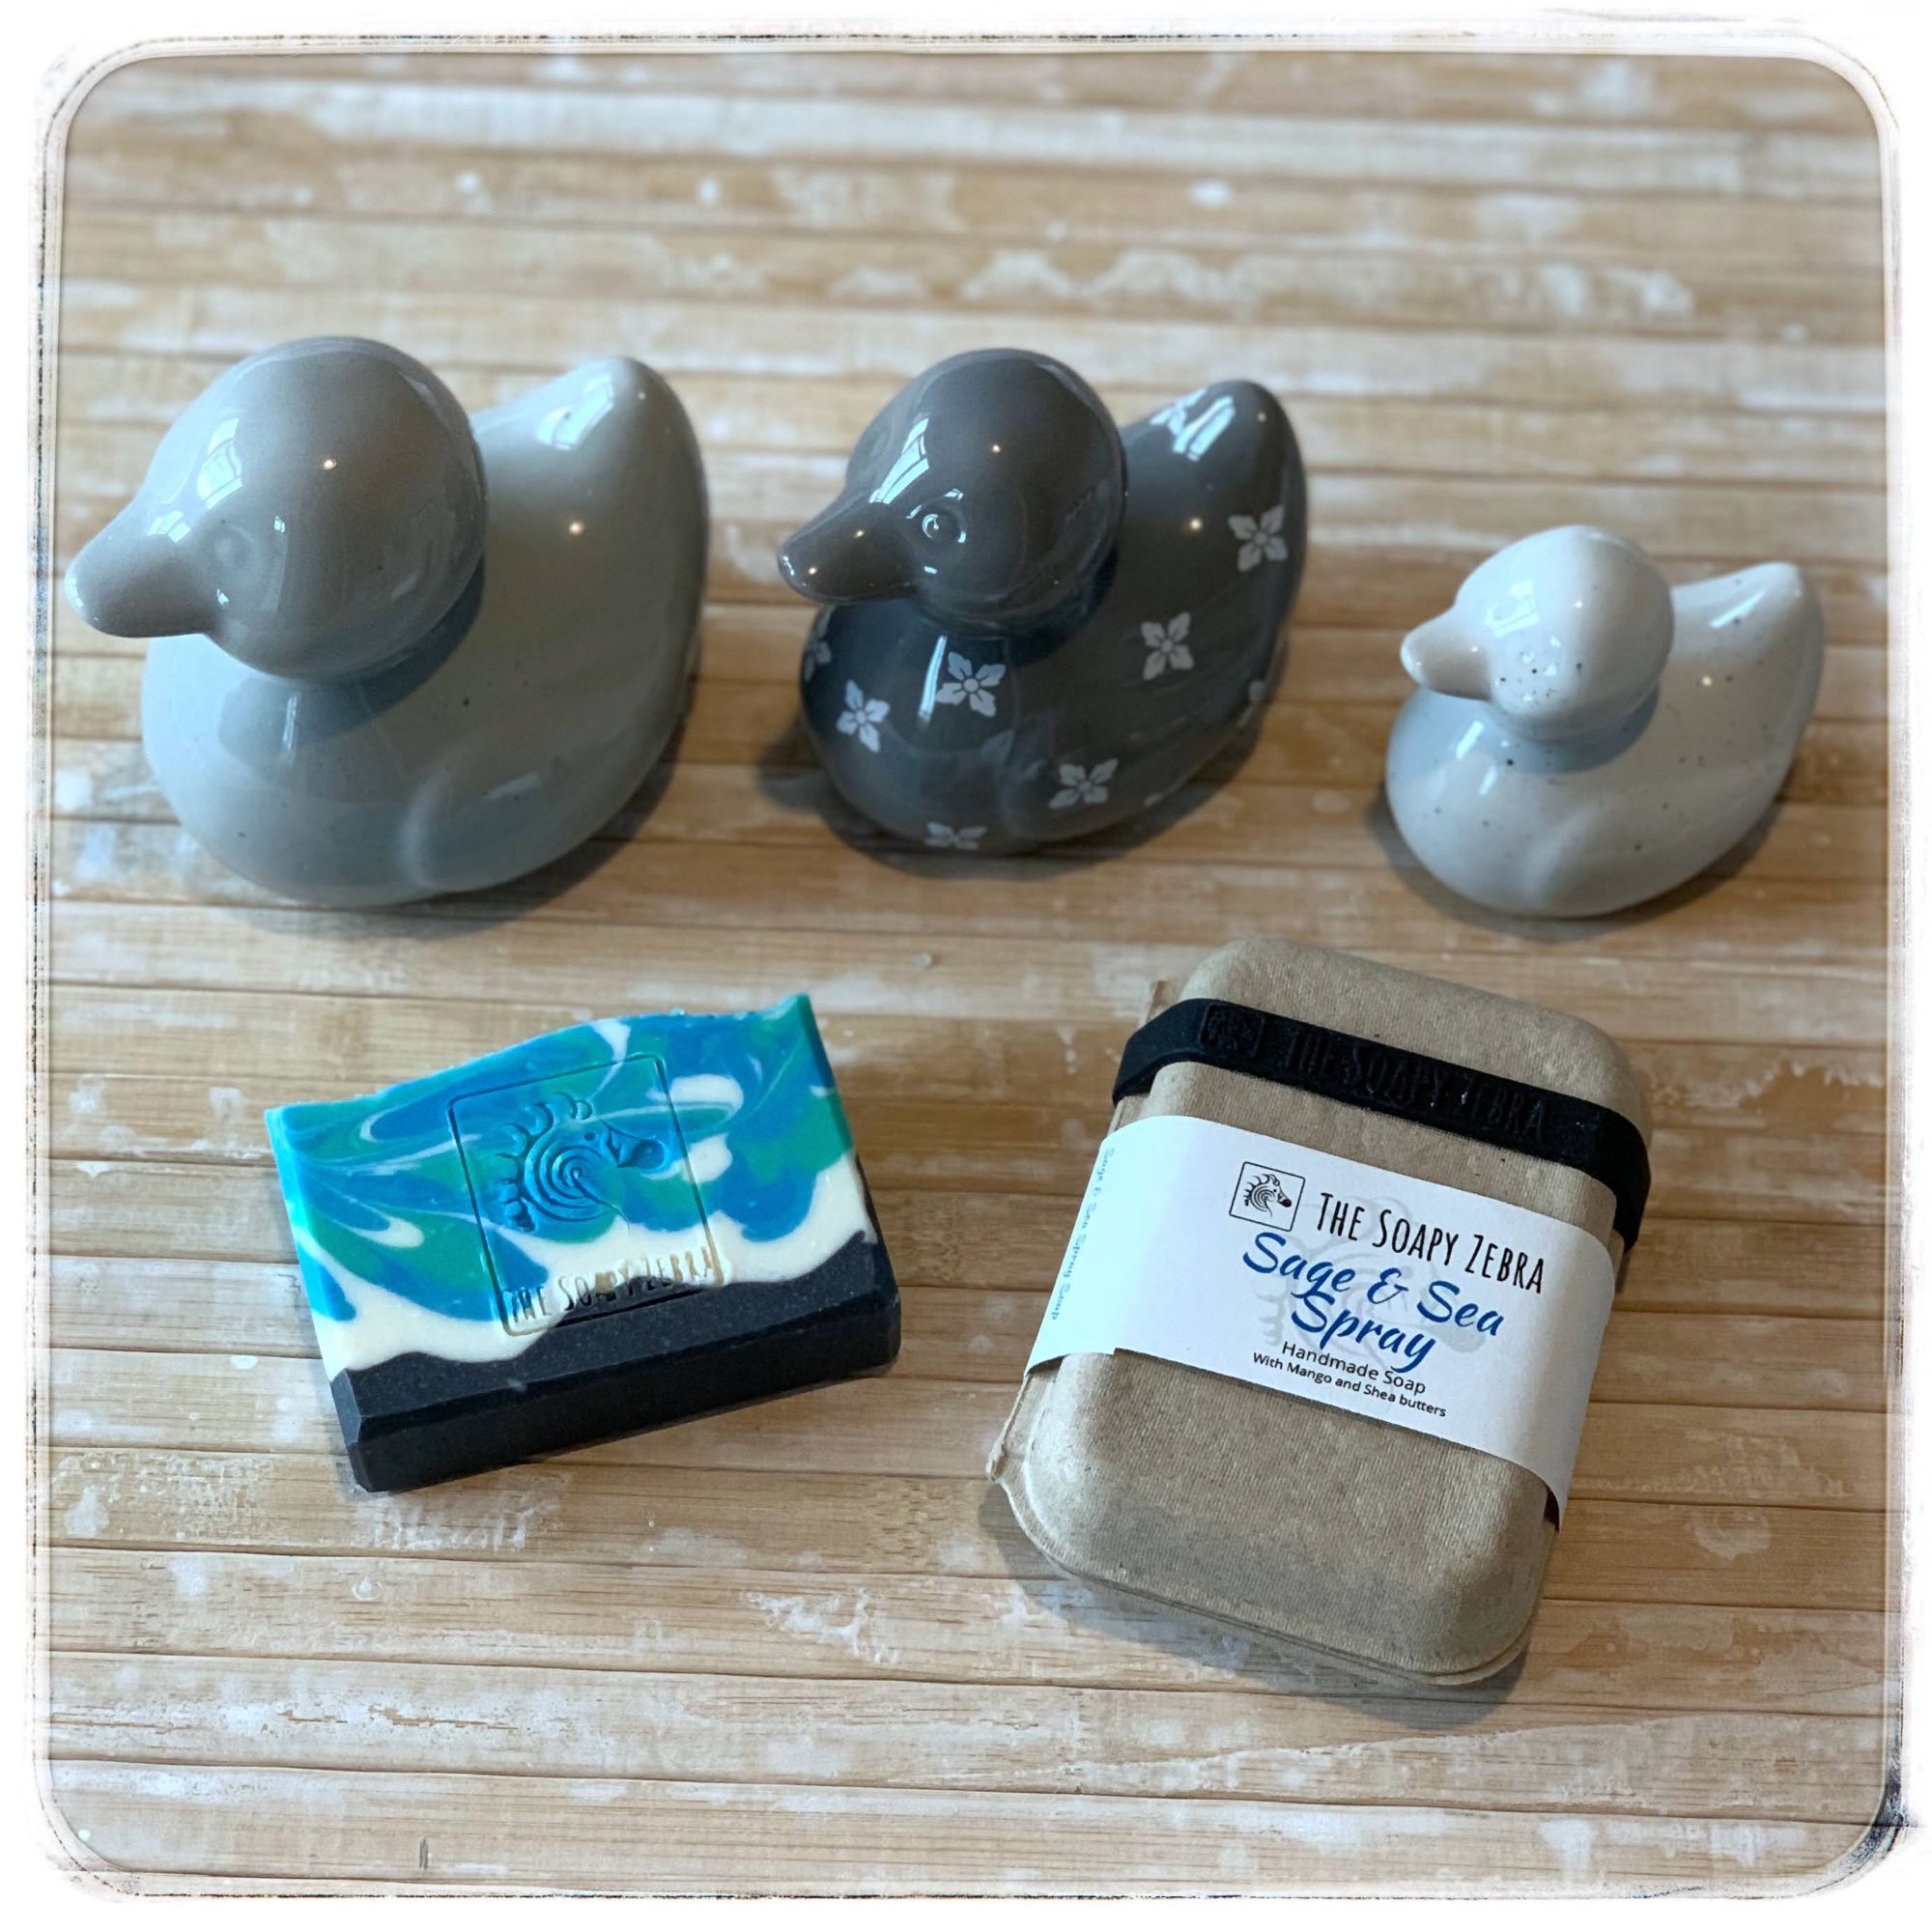 Sage & Sea Spray and ceramic ducks